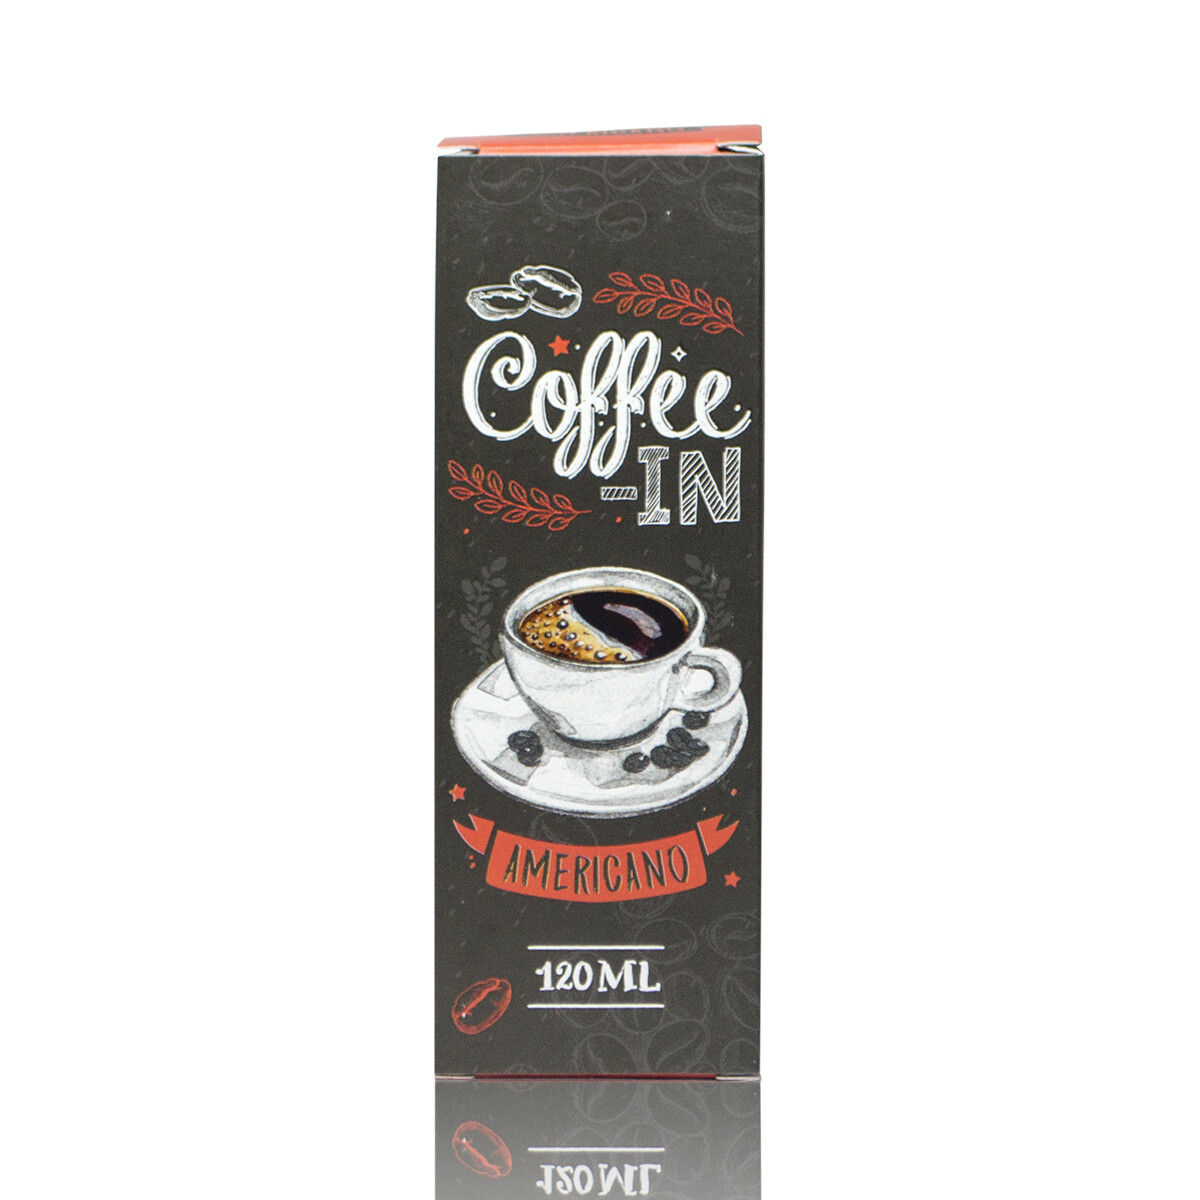 COFFE-IN: AMERICANO 120ML 3MG